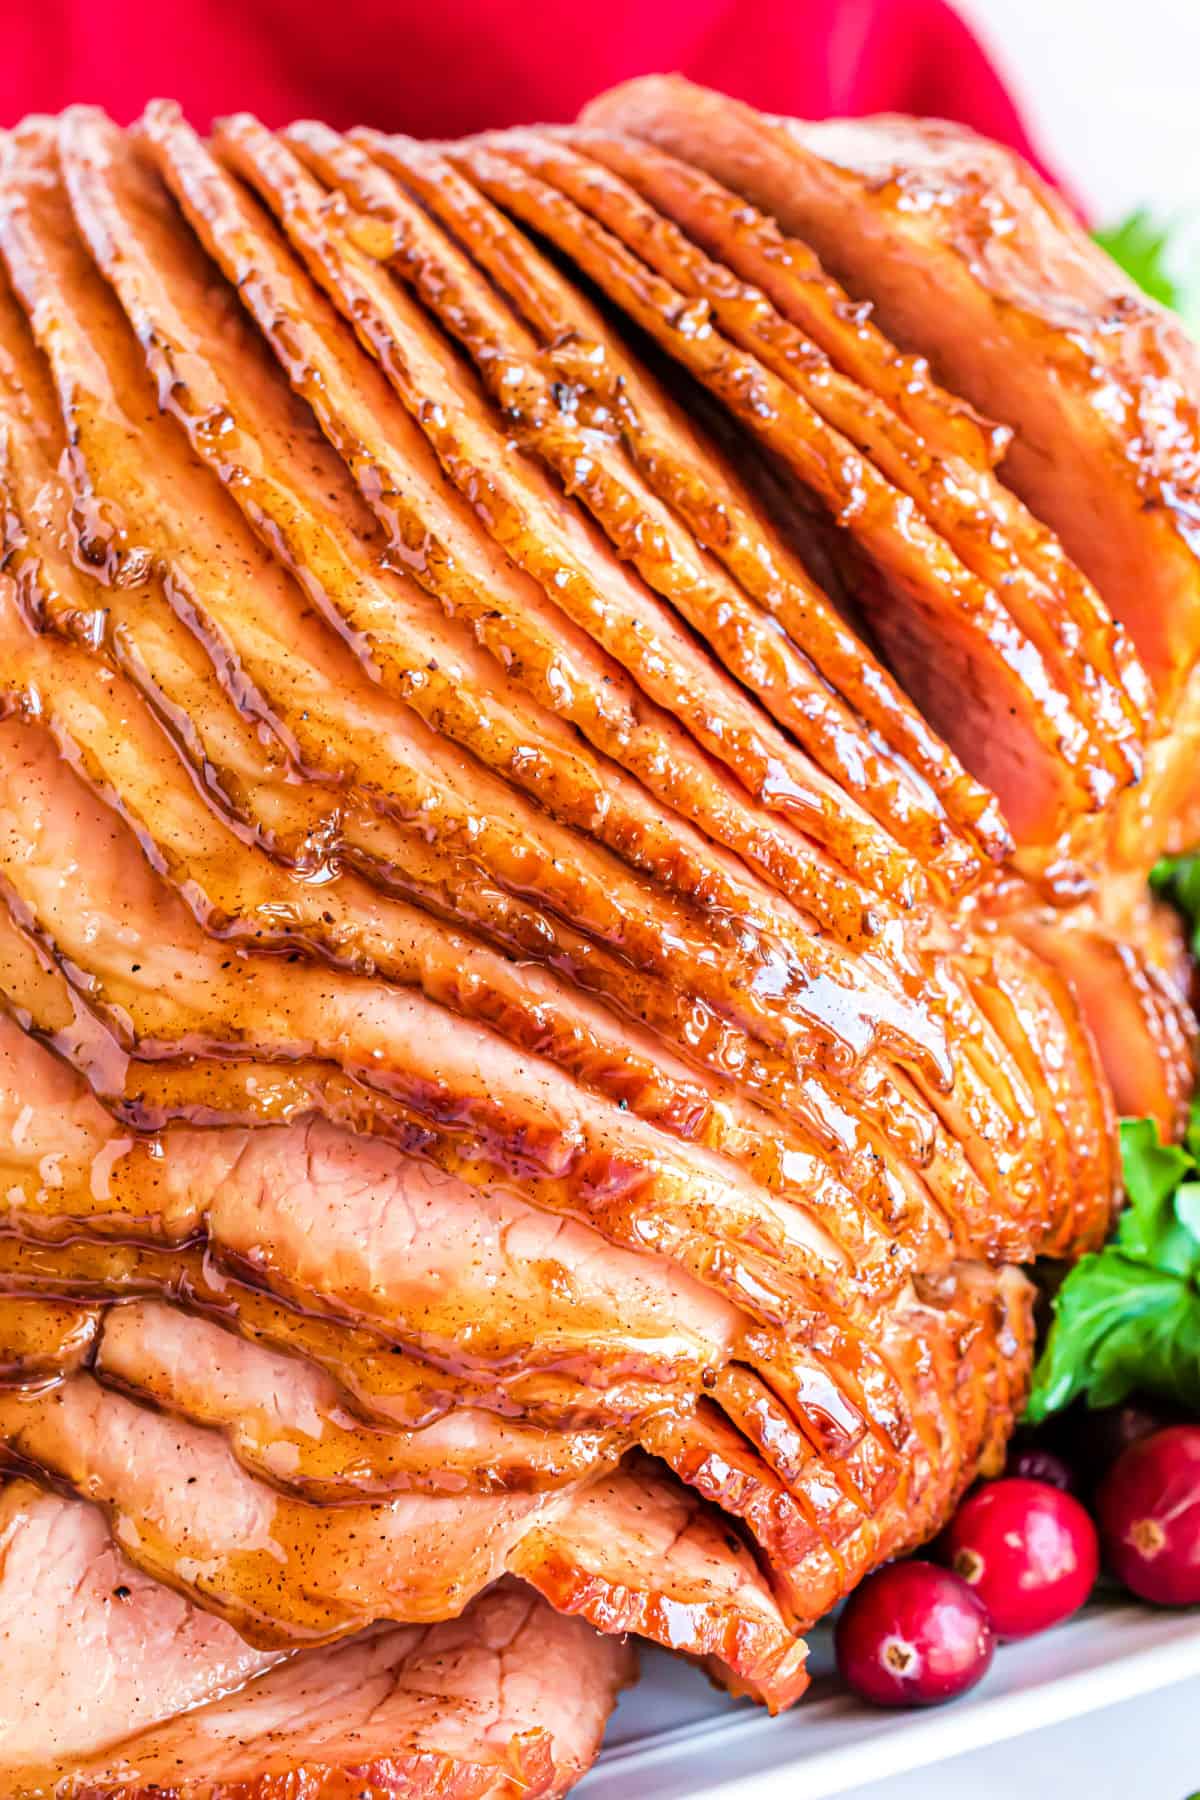 Spiral sliced baked ham with a brown sugar glaze.